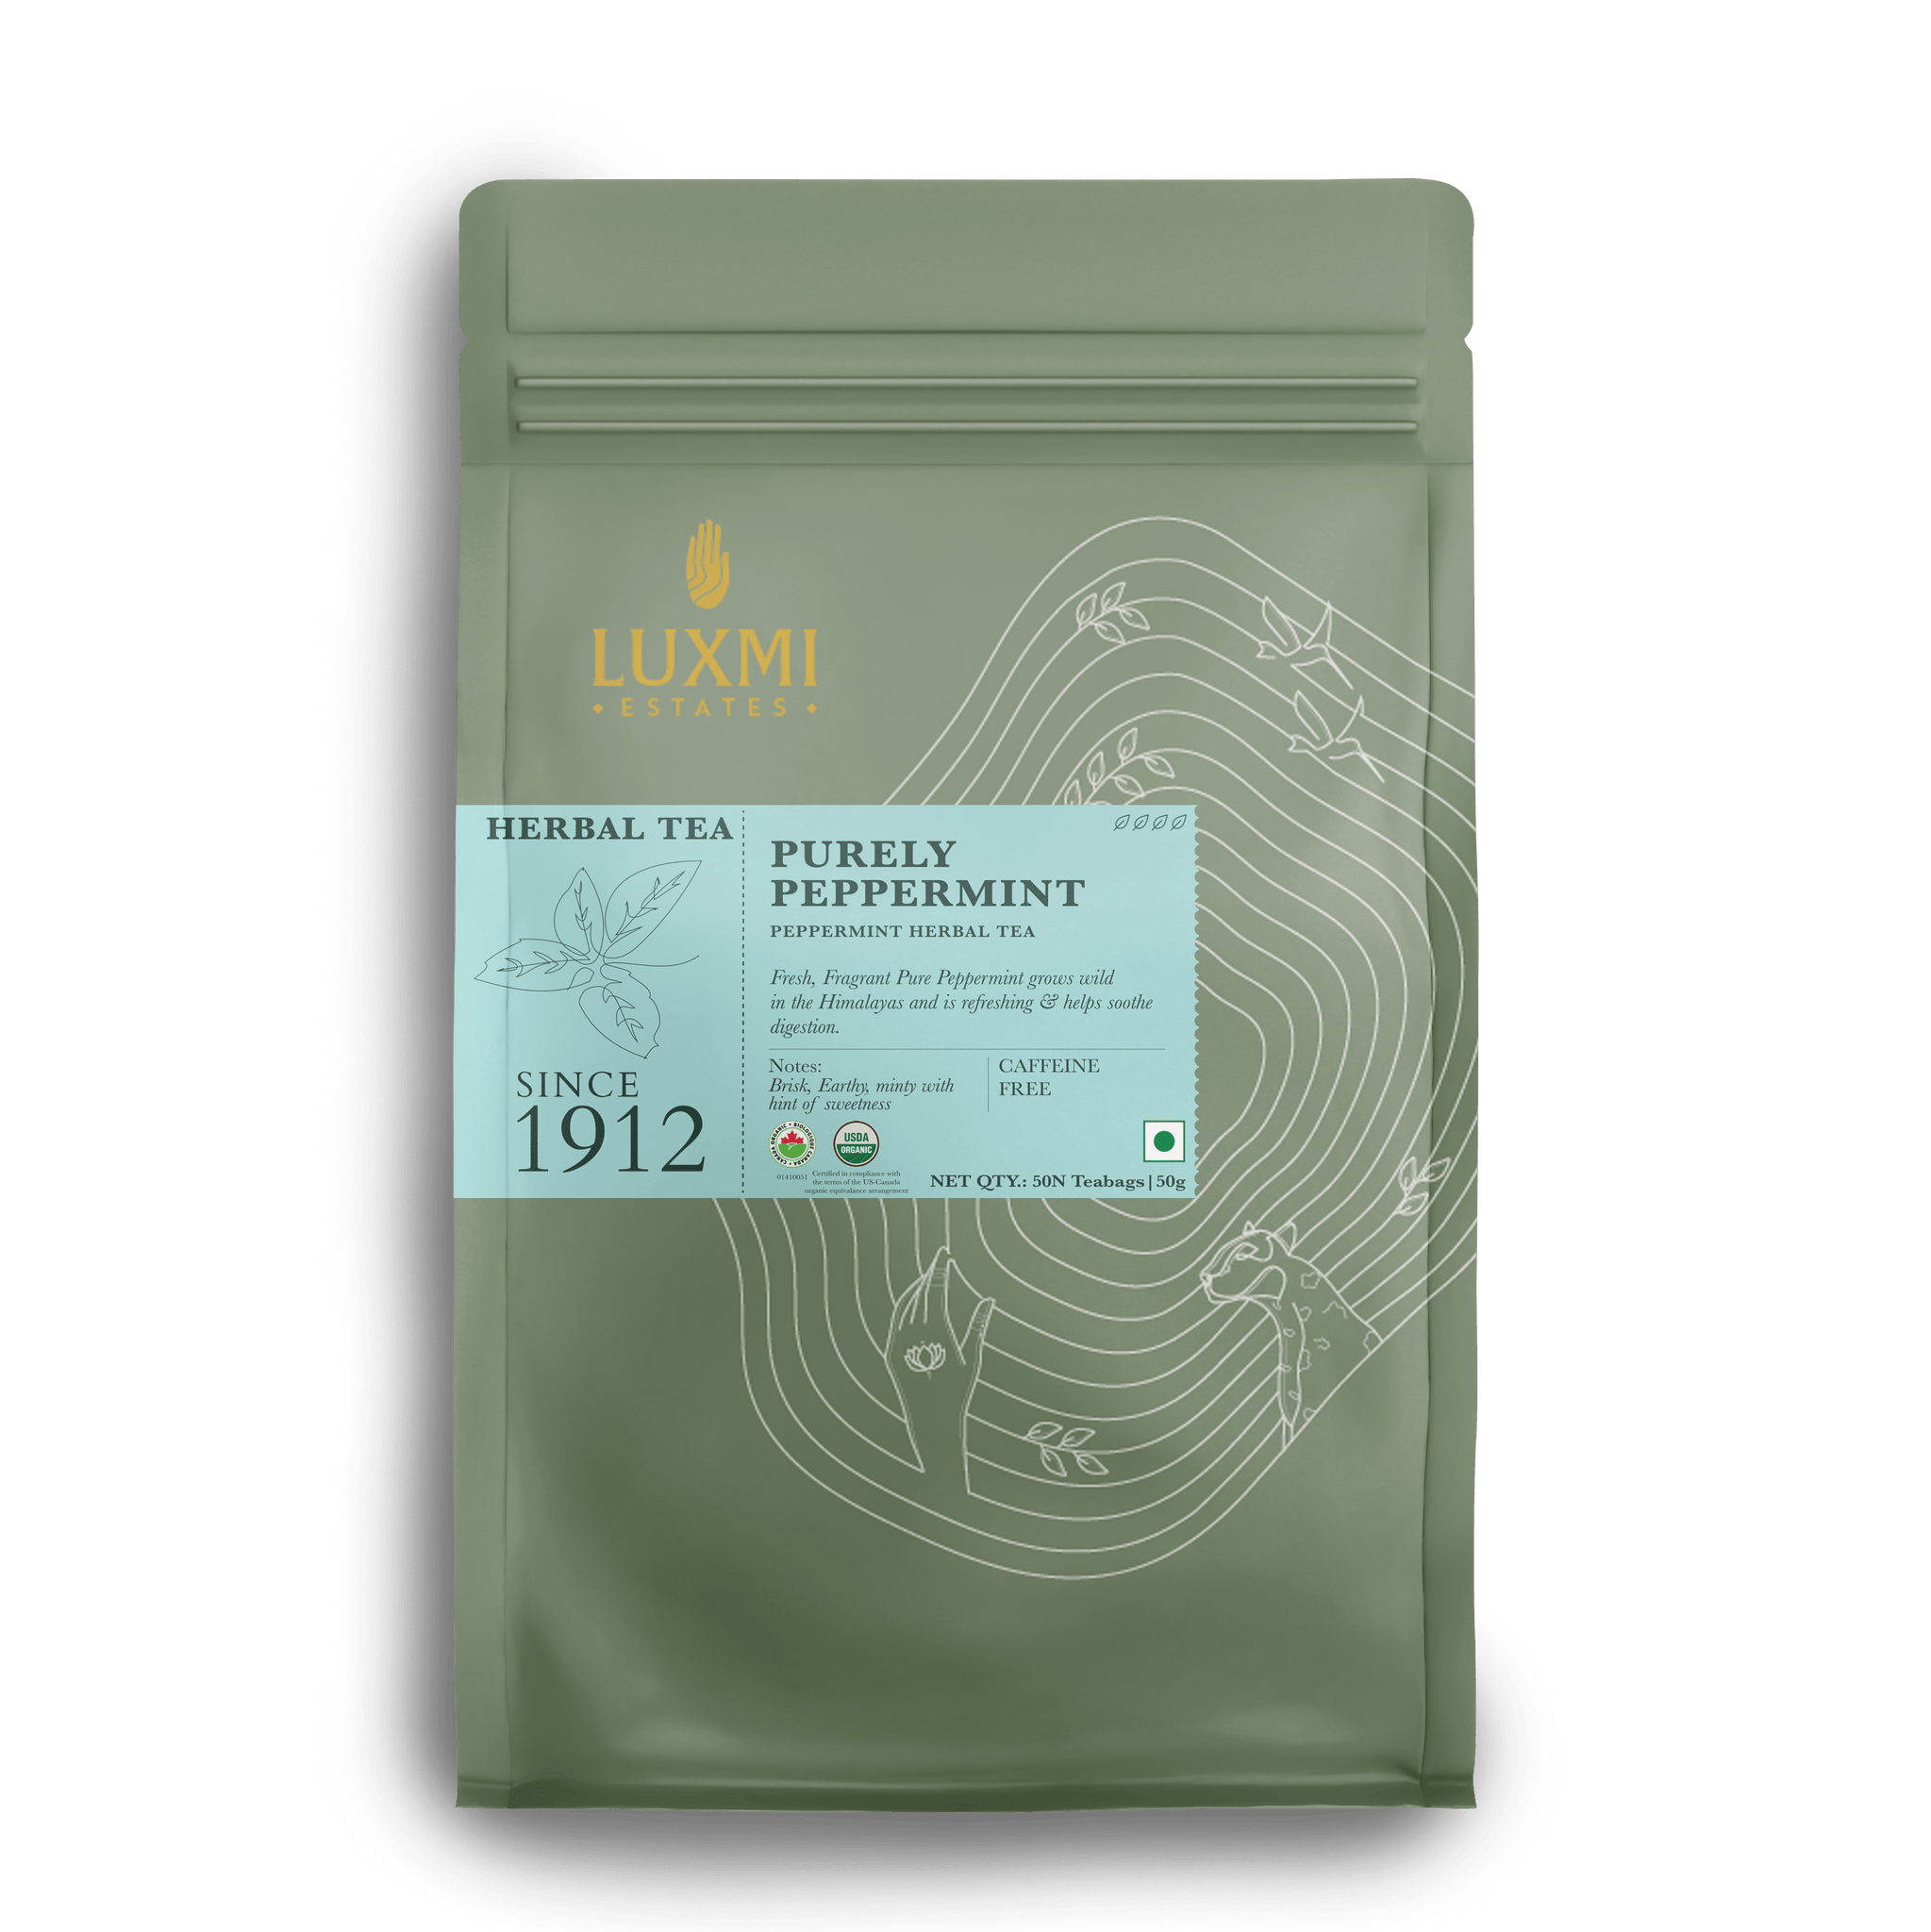 Purely Peppermint | 50 Tea bags | Organic Herbal Tea - Luxmi Estates